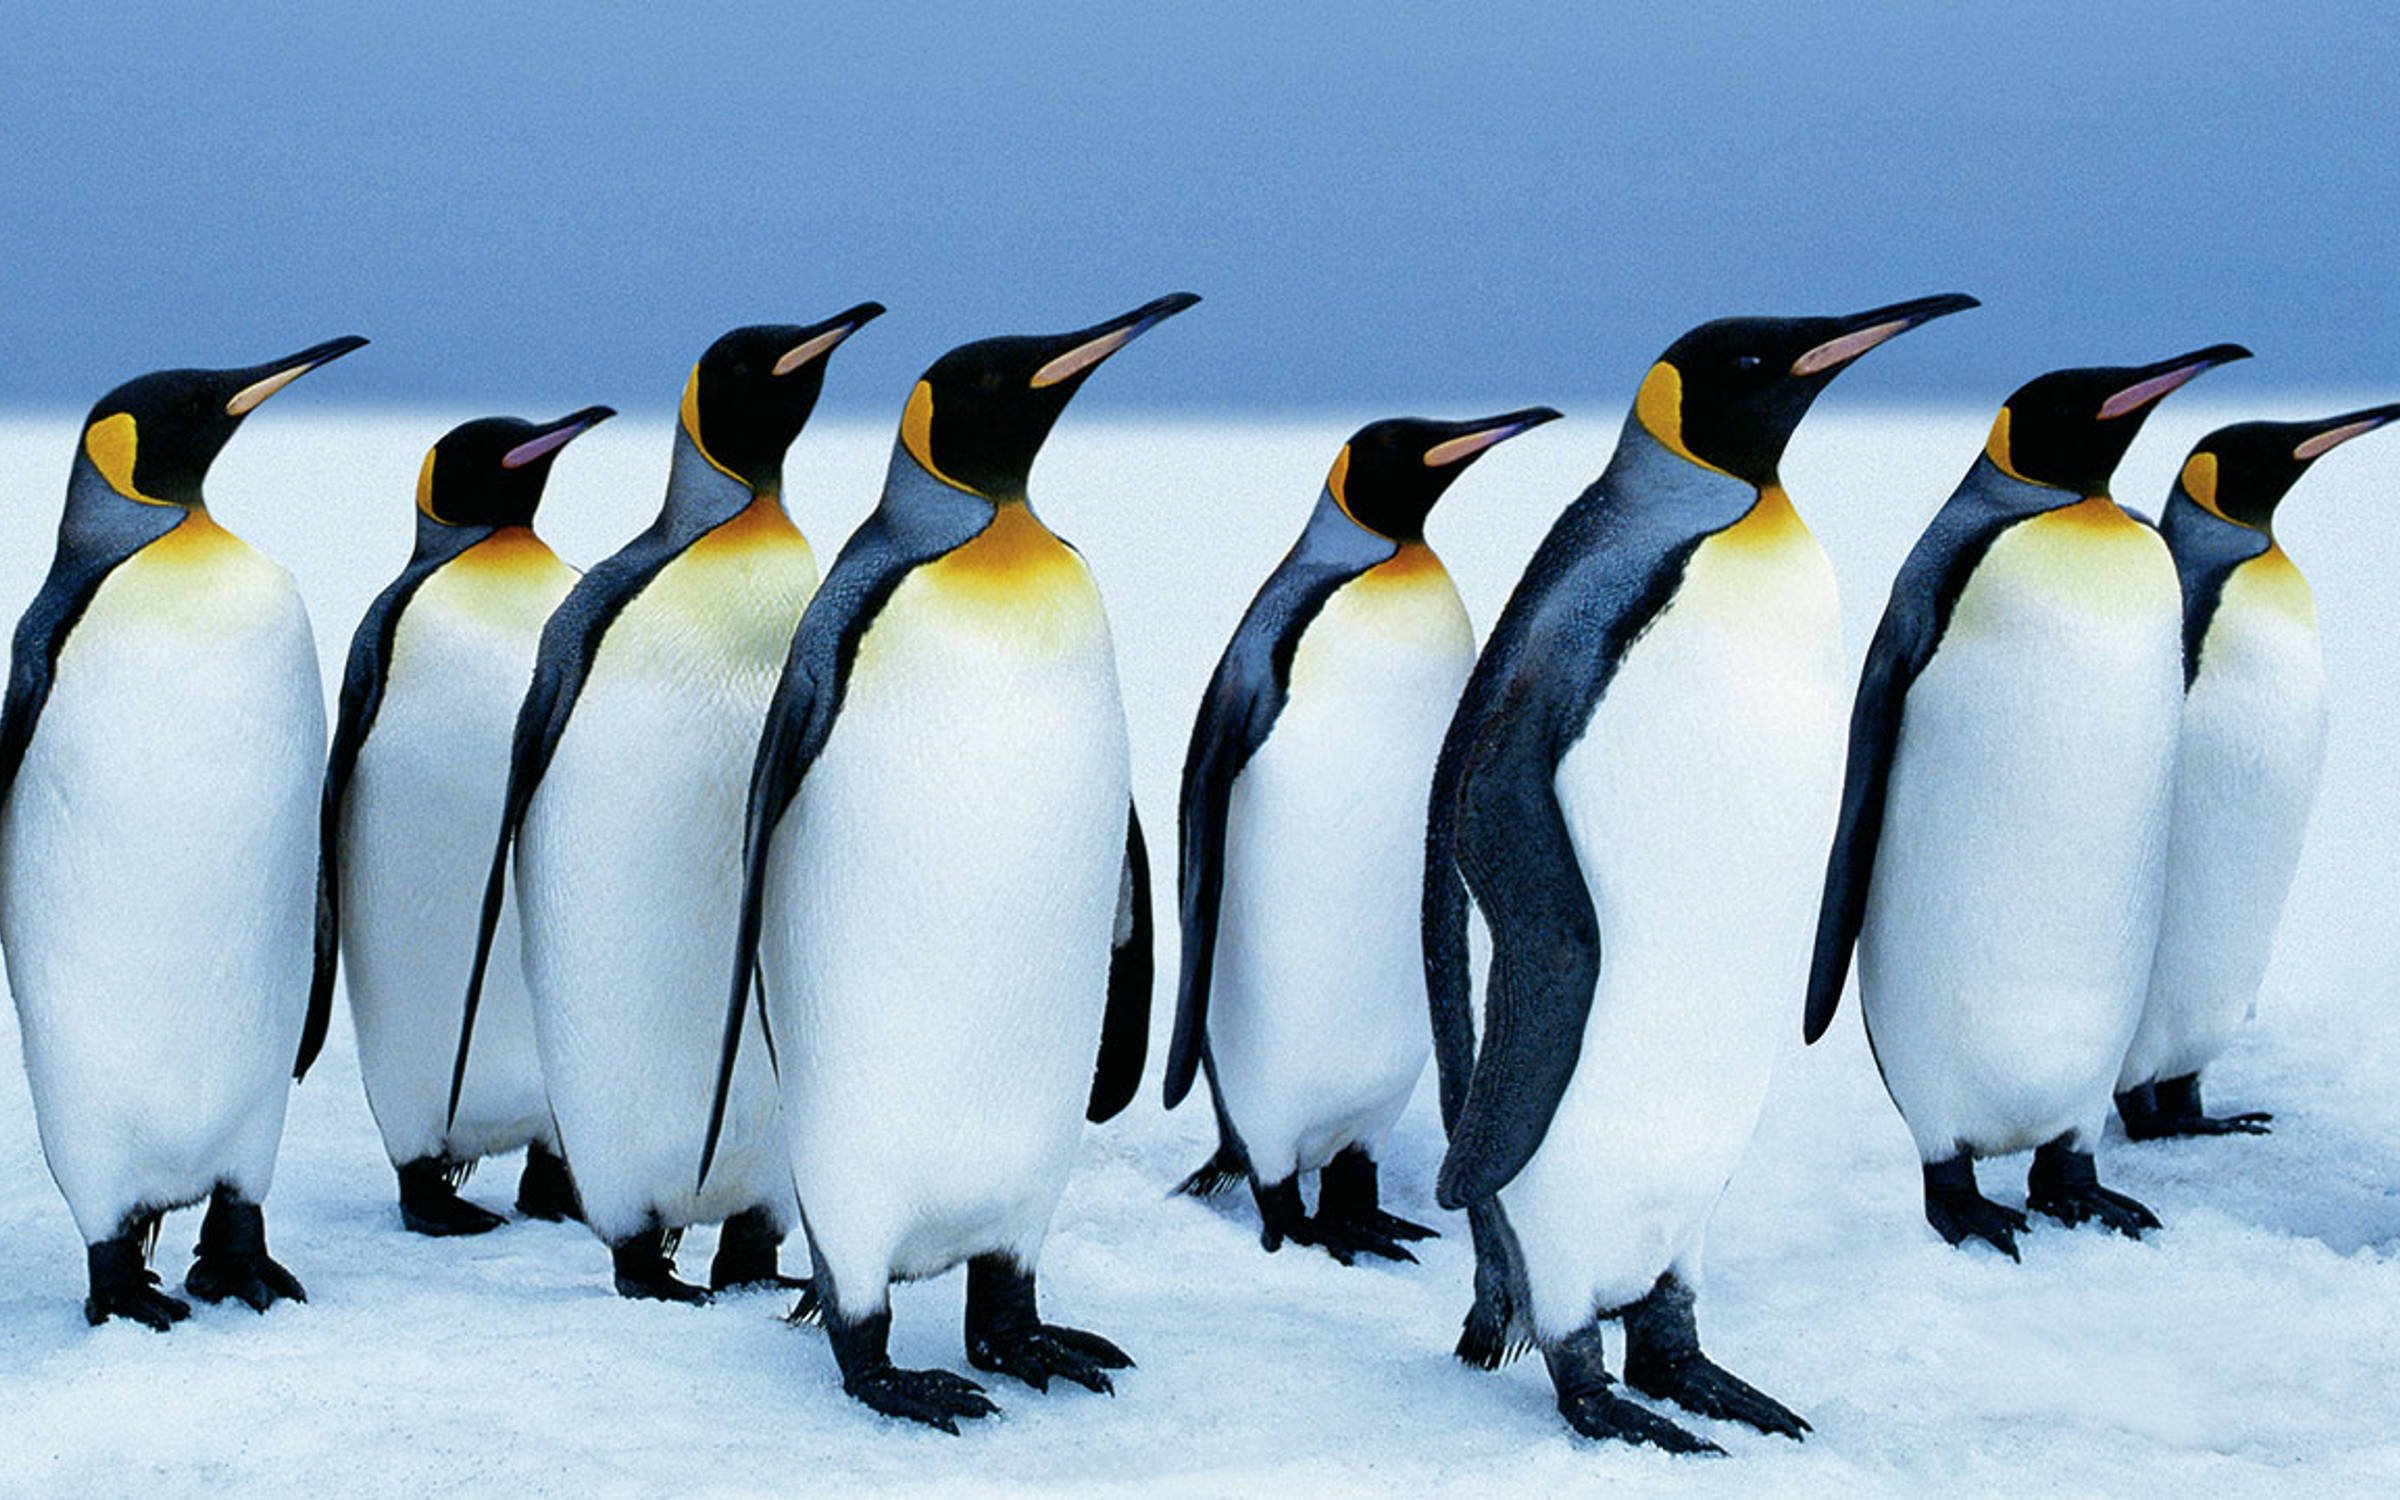 Loyalty – Penguins standing together.